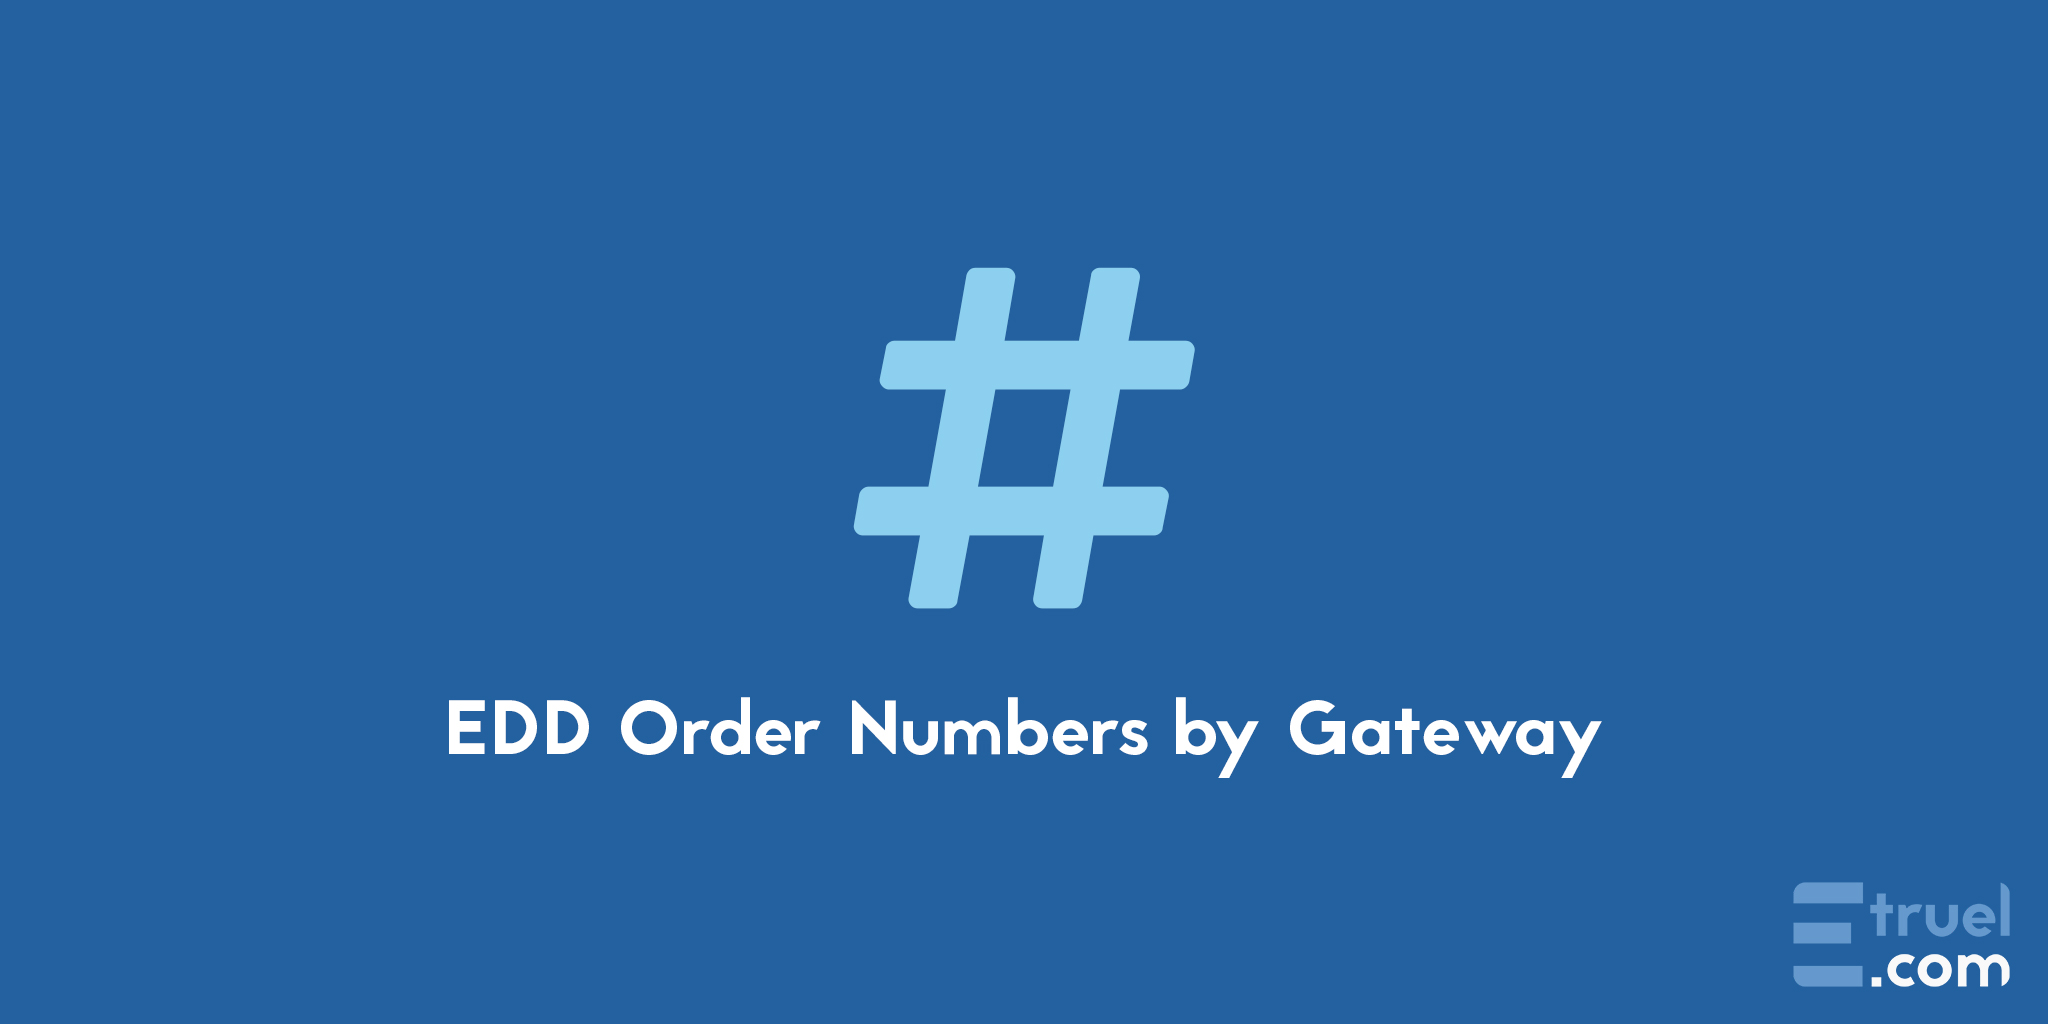 Edd order numbers by gateway - edd order number by gateway